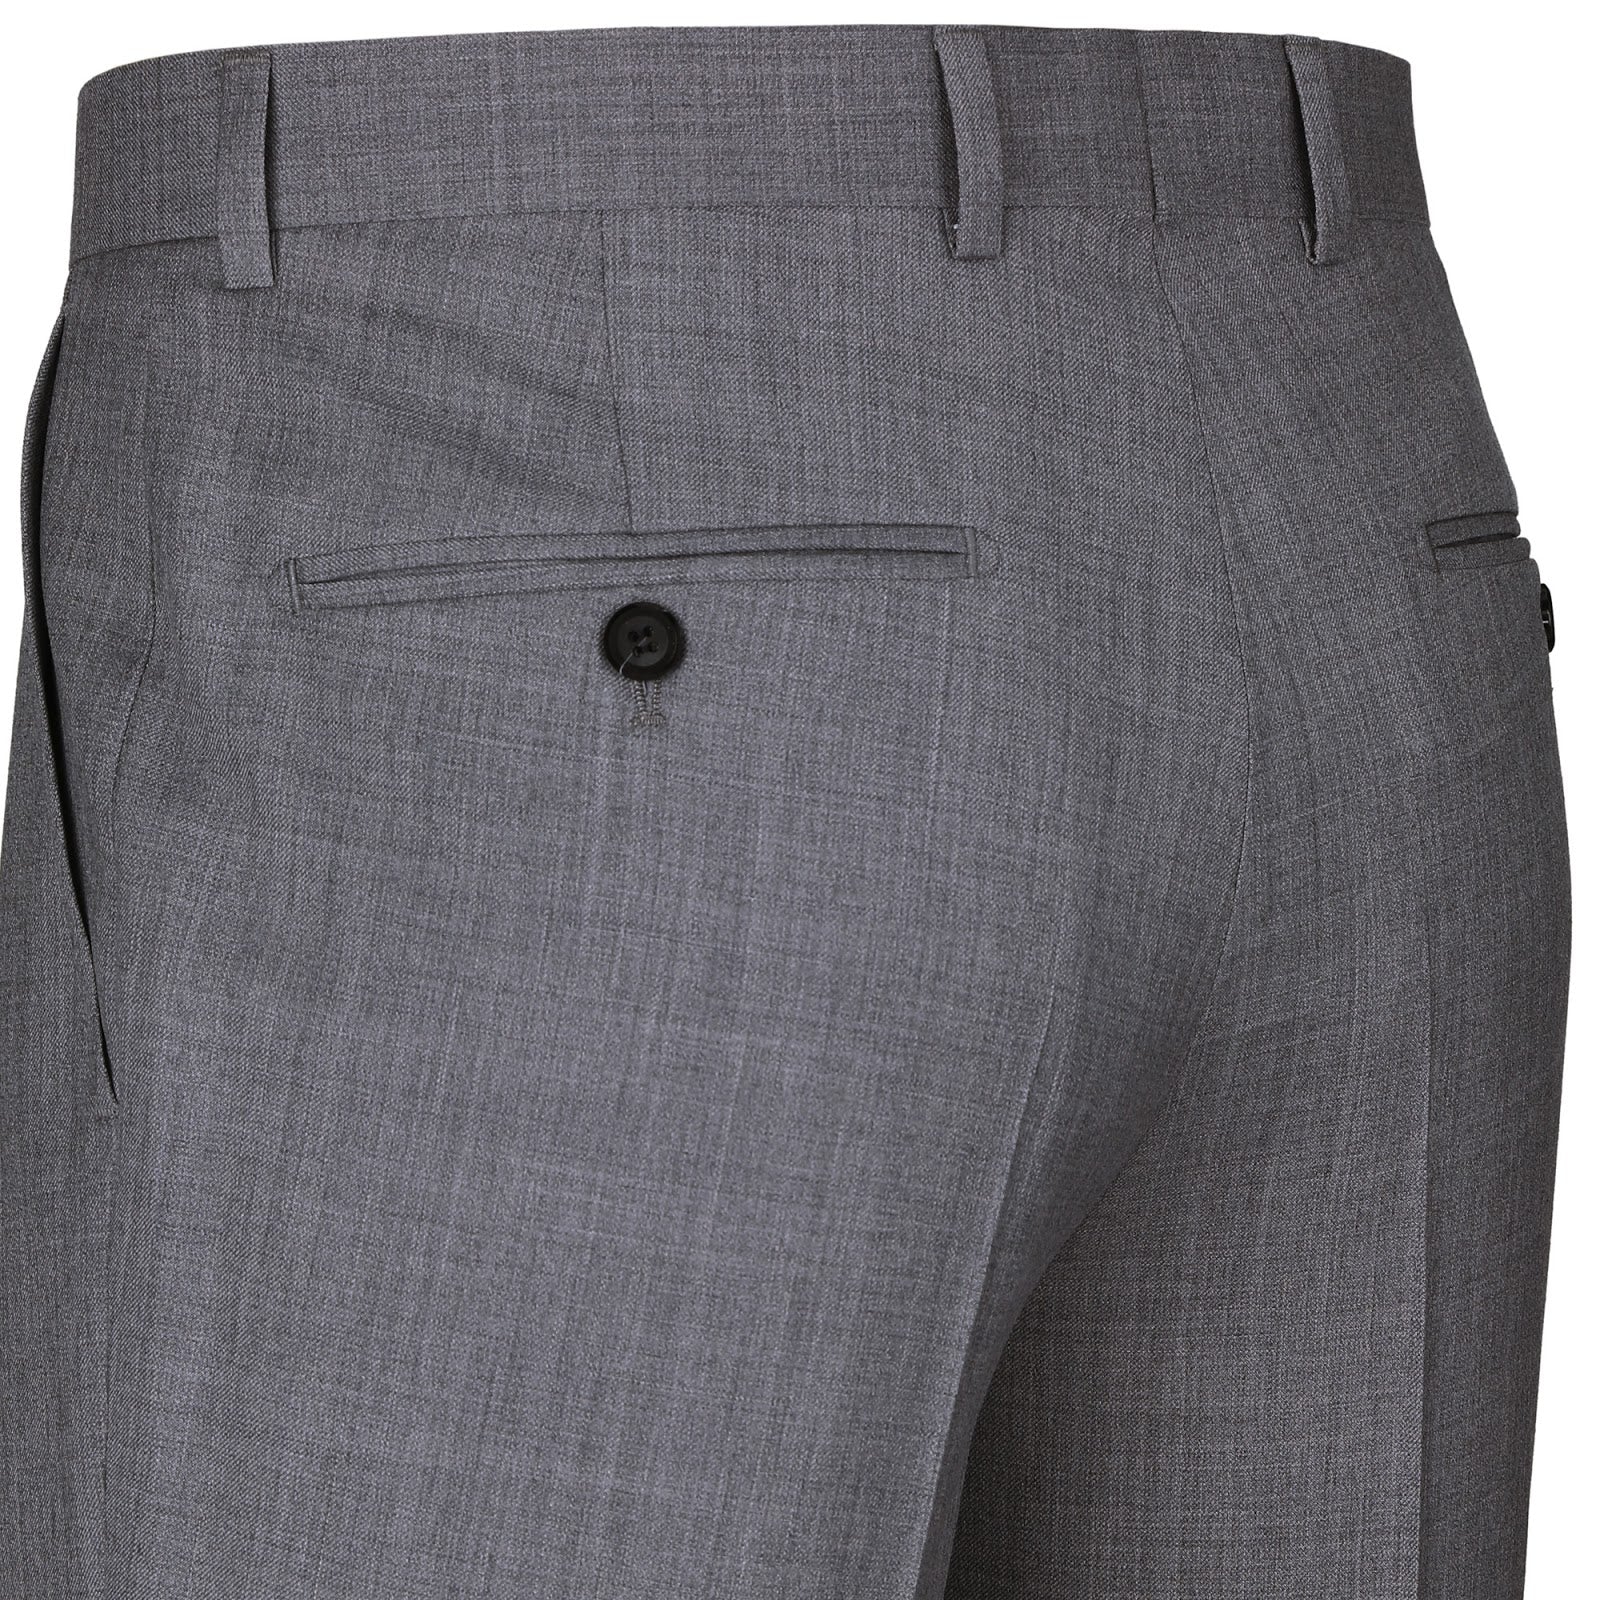 RENOIR Dark Grey 2-Piece Classic Fit Notch Lapel Wool Suit 508-3